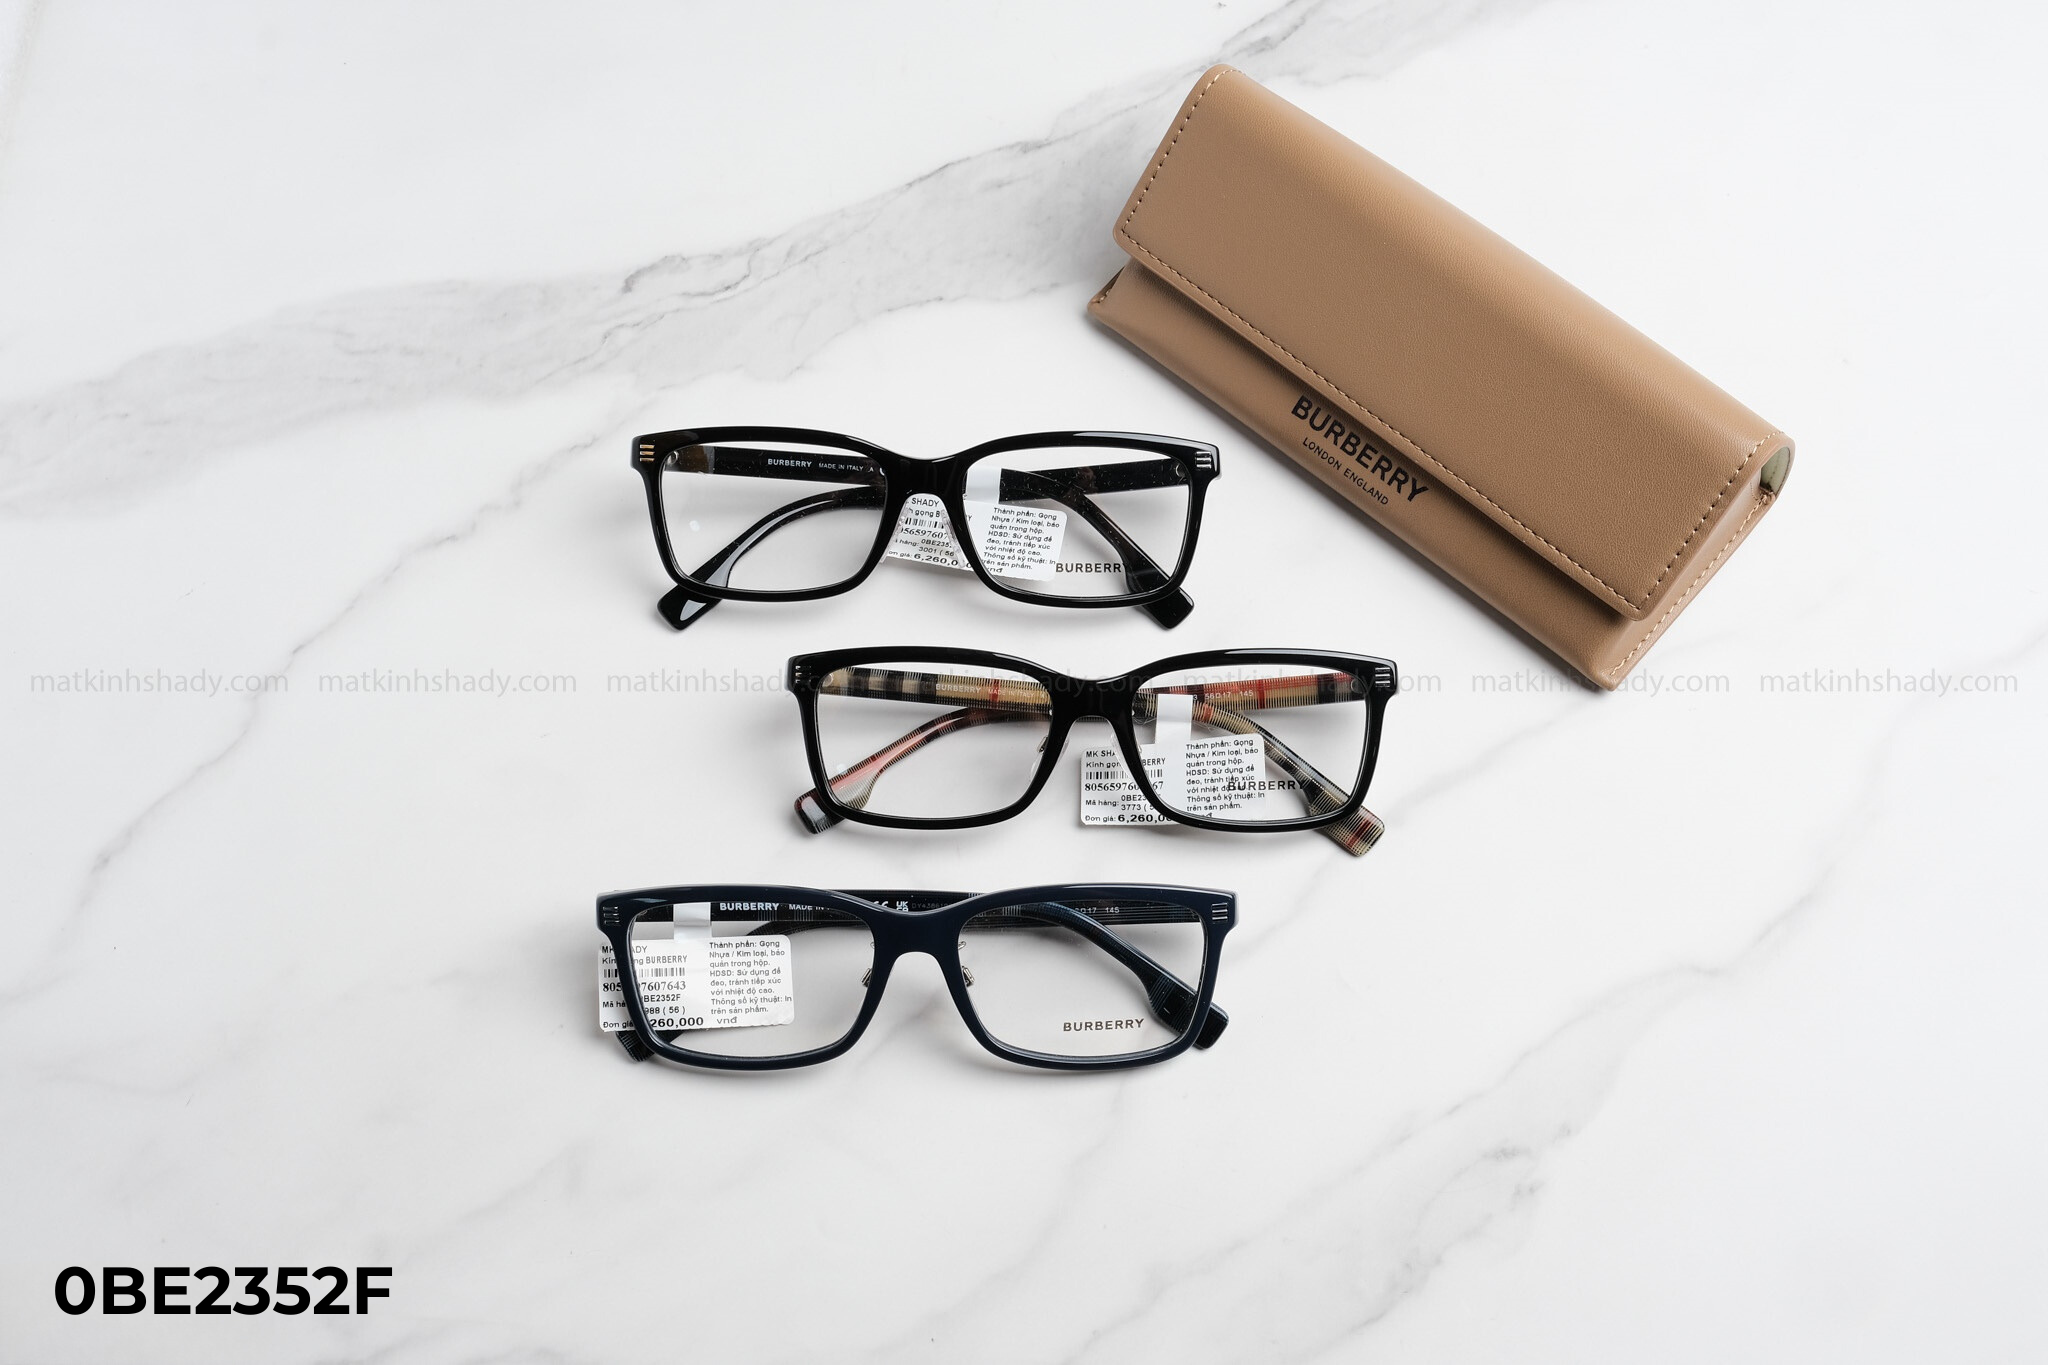  Burberry Eyewear - Glasses - 0BE2352F 